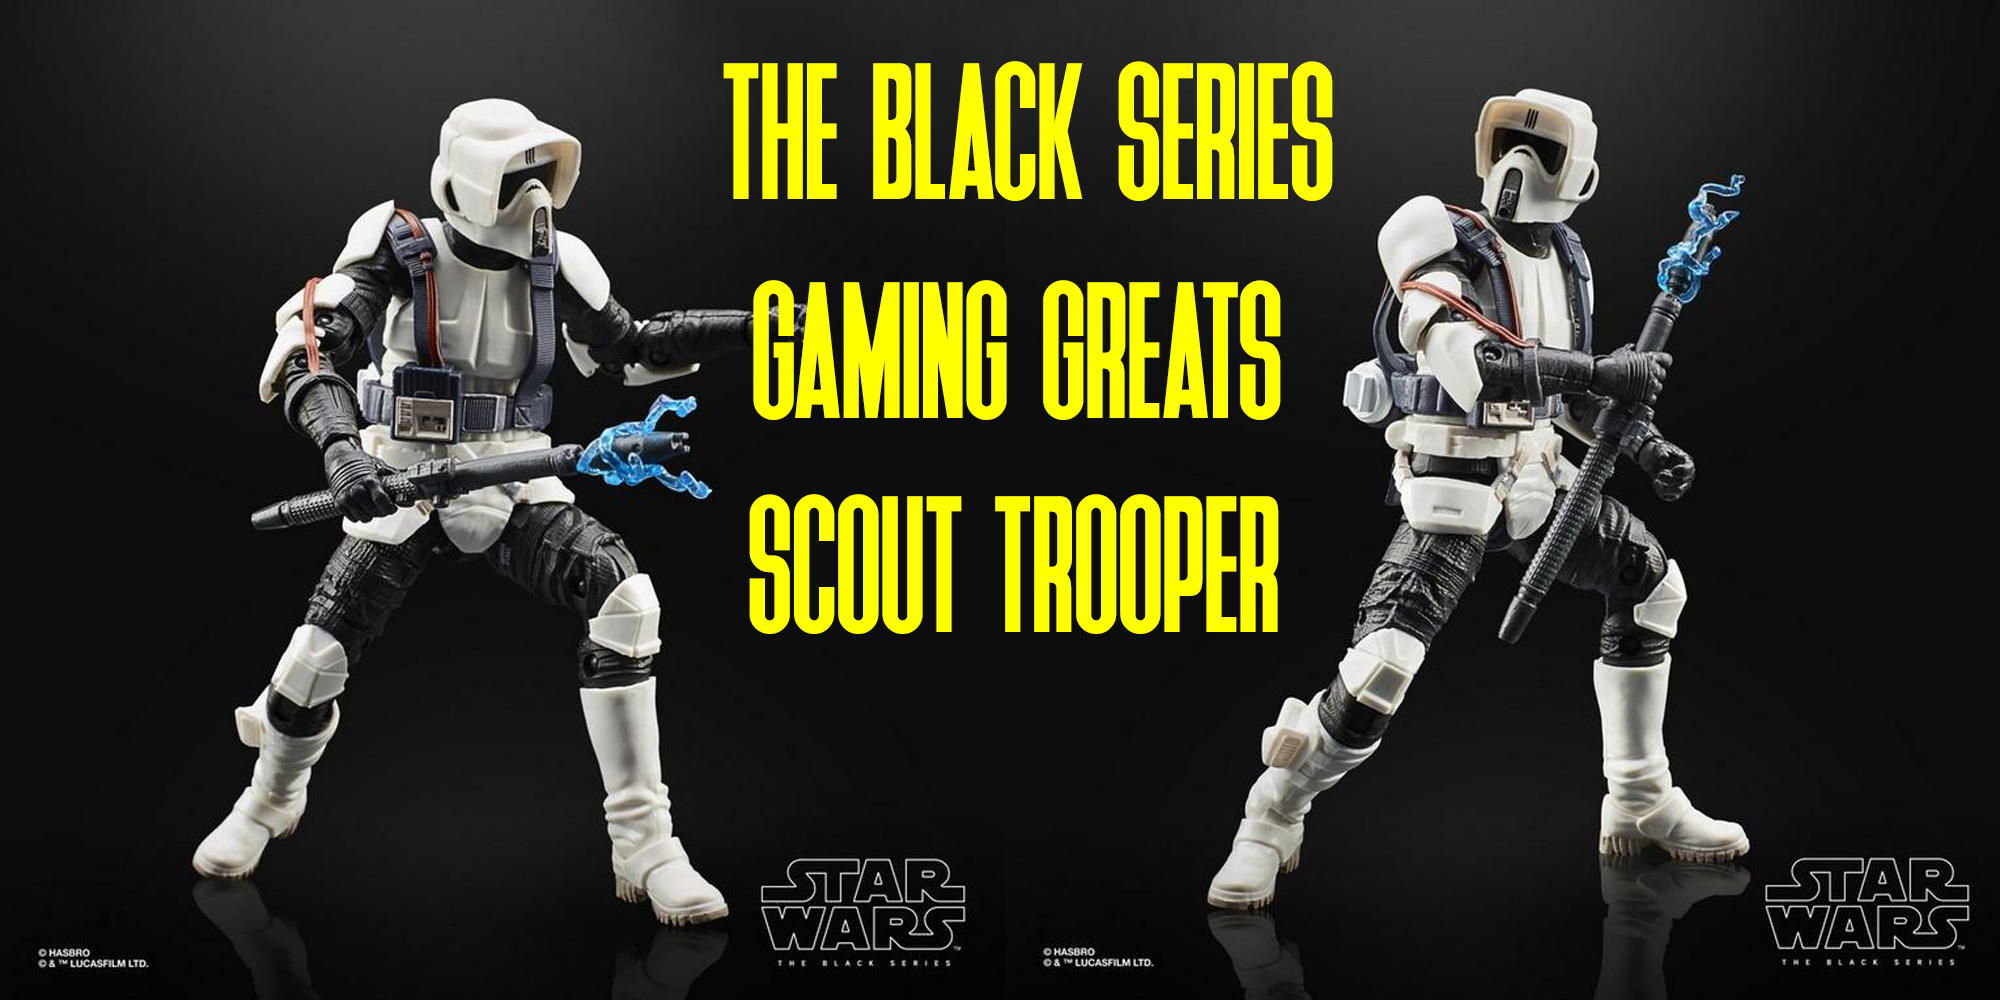 Black Series Scout Trooper (Gaming Greats)